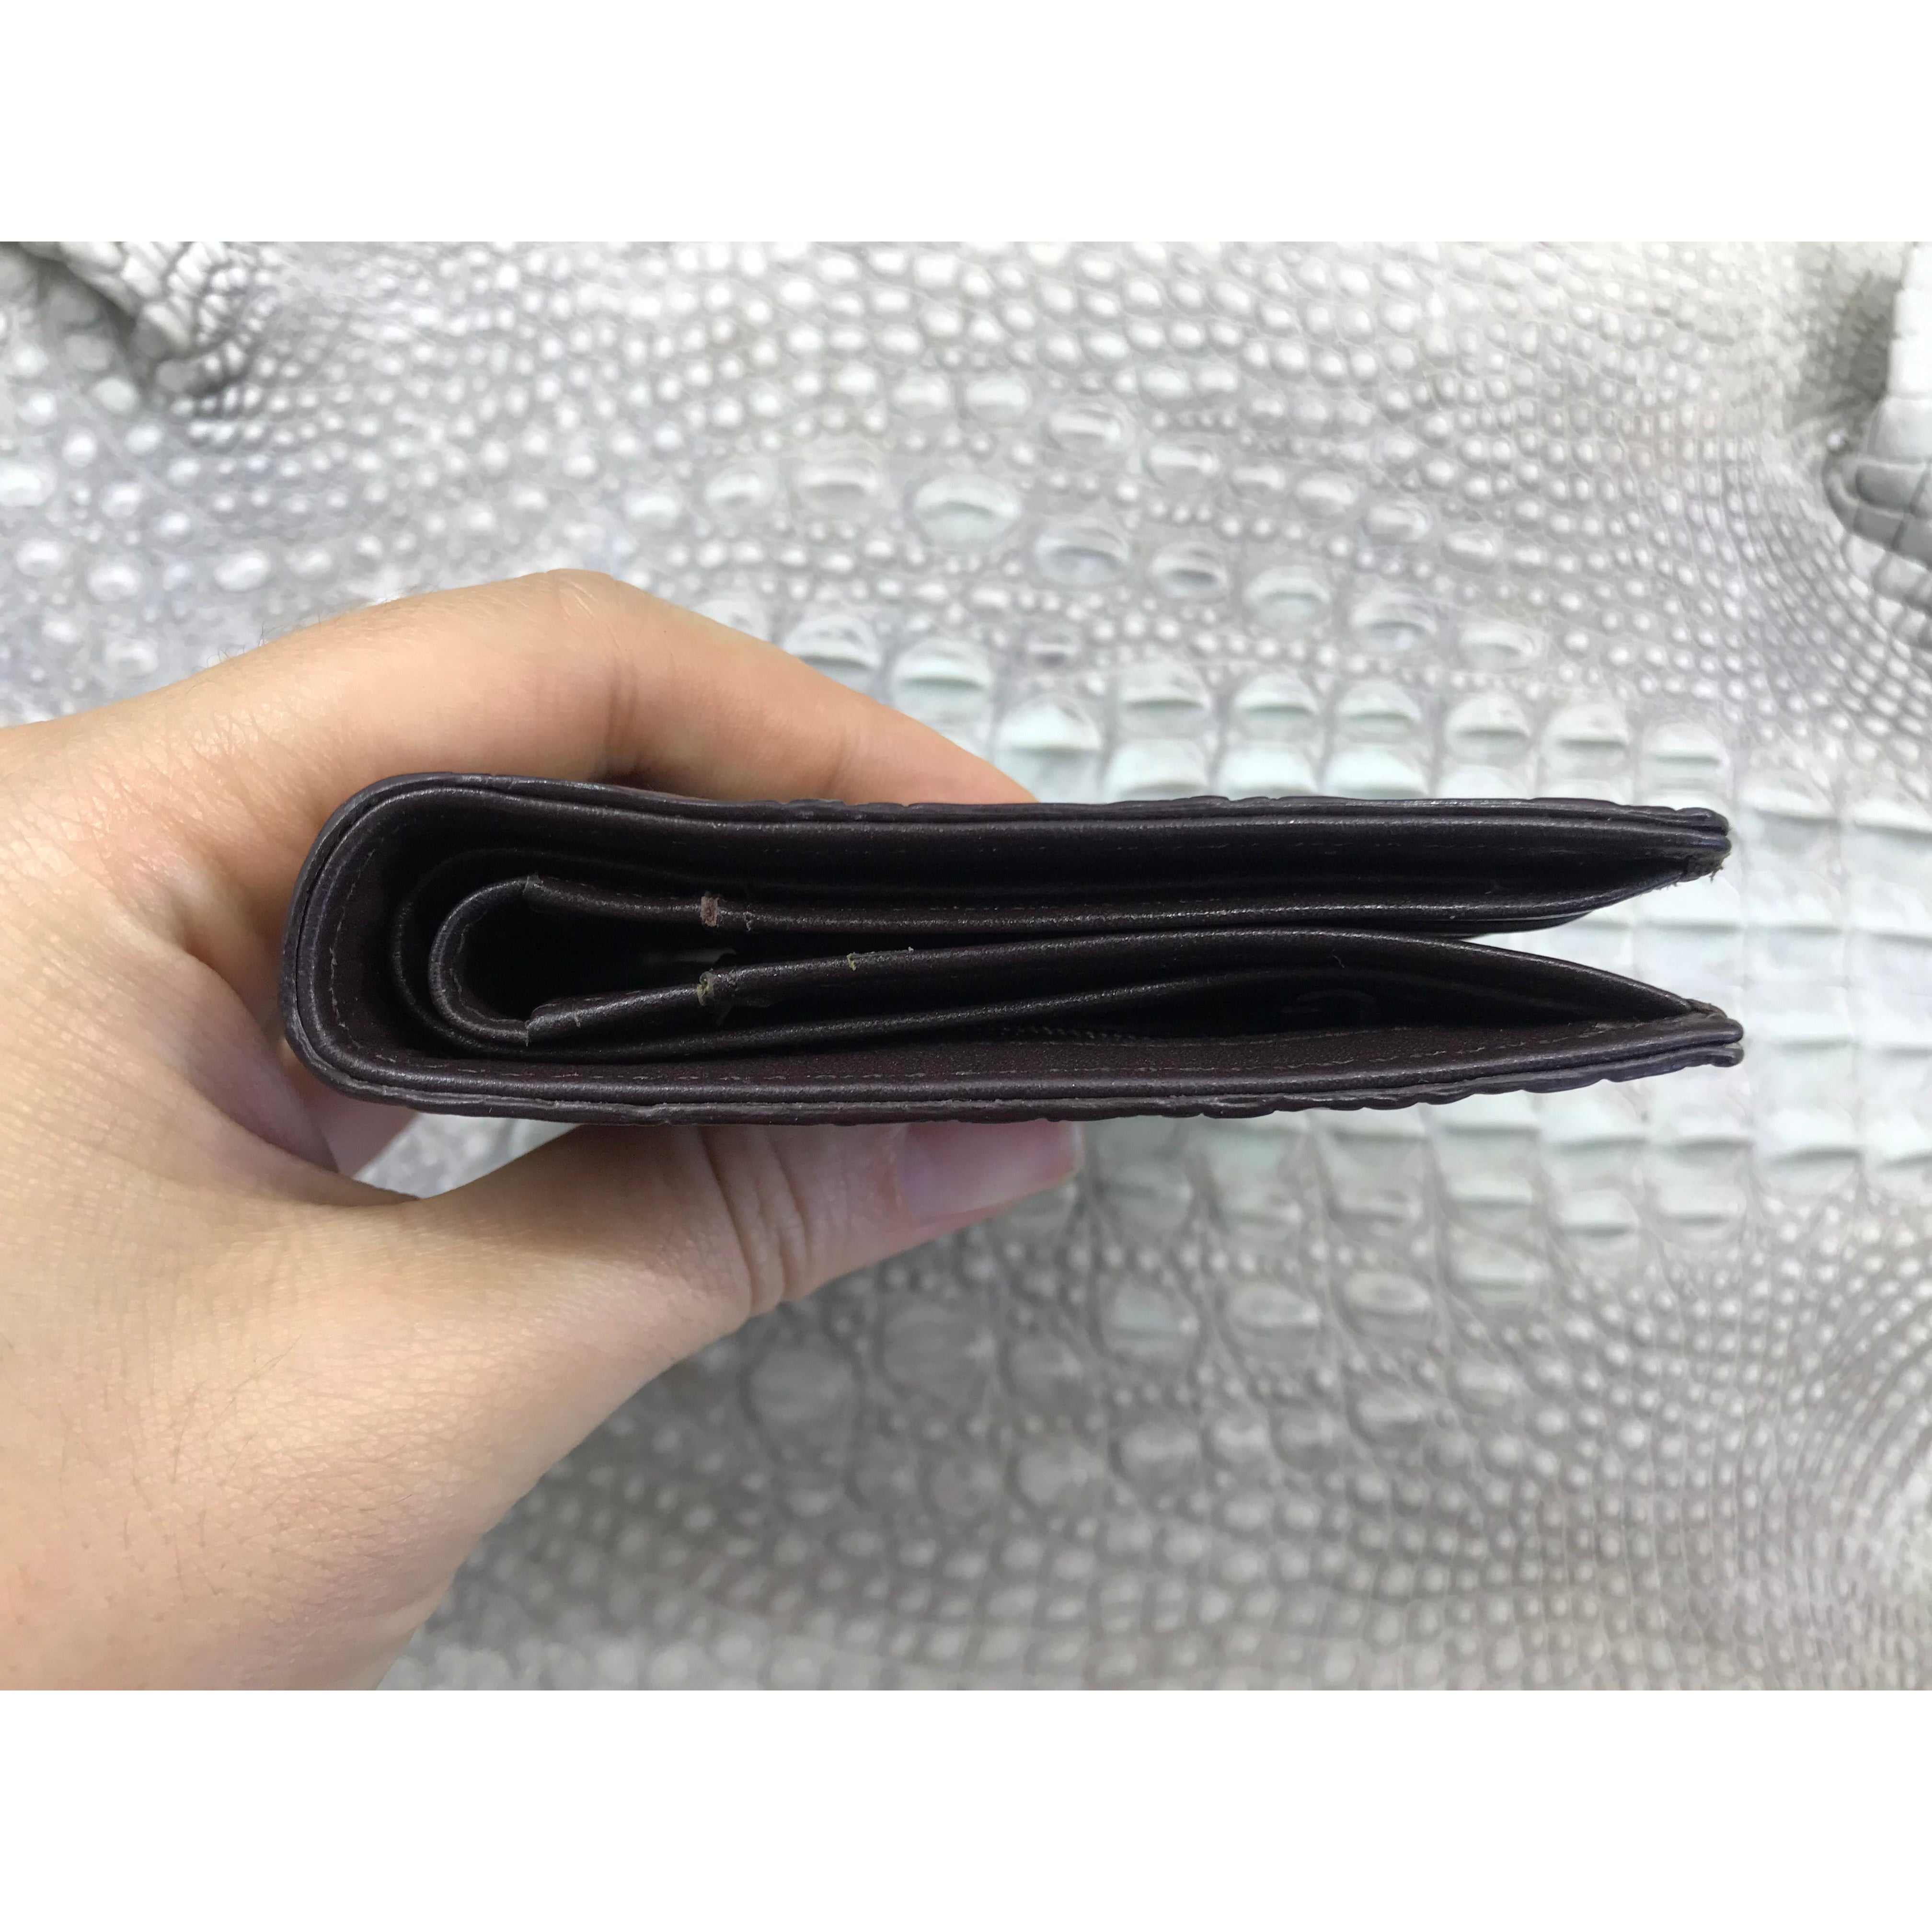 Dark Brown Alligator Skin Bifold Vertical Wallet For Men | Handmade Crocodile Leather Wallet RFID Blocking | VL5694 - Vinacreations